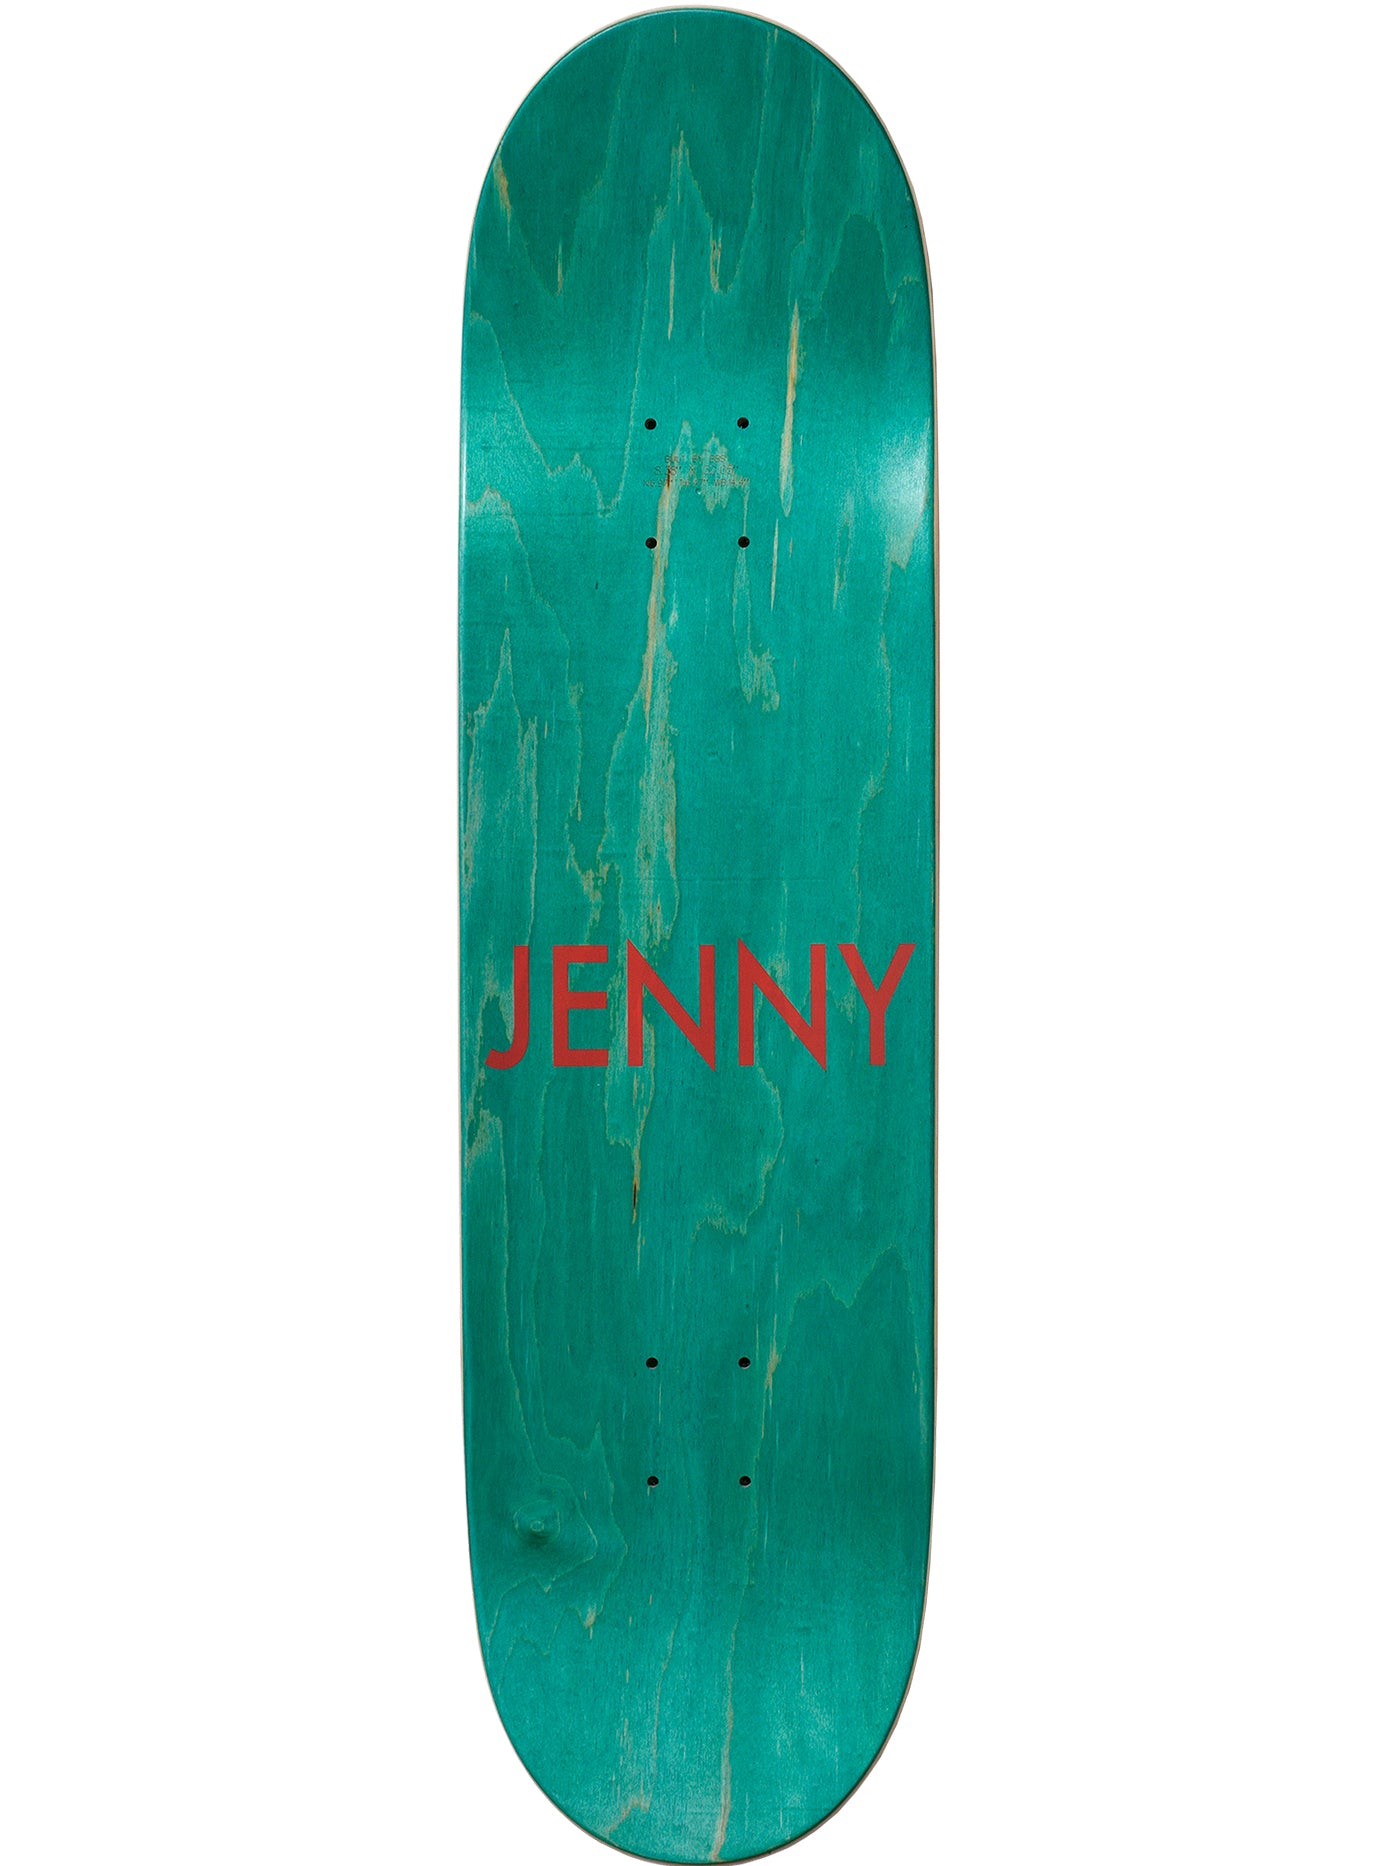 Jenny White Snek 8.1, 8.25 & 8.75 Skateboard Deck